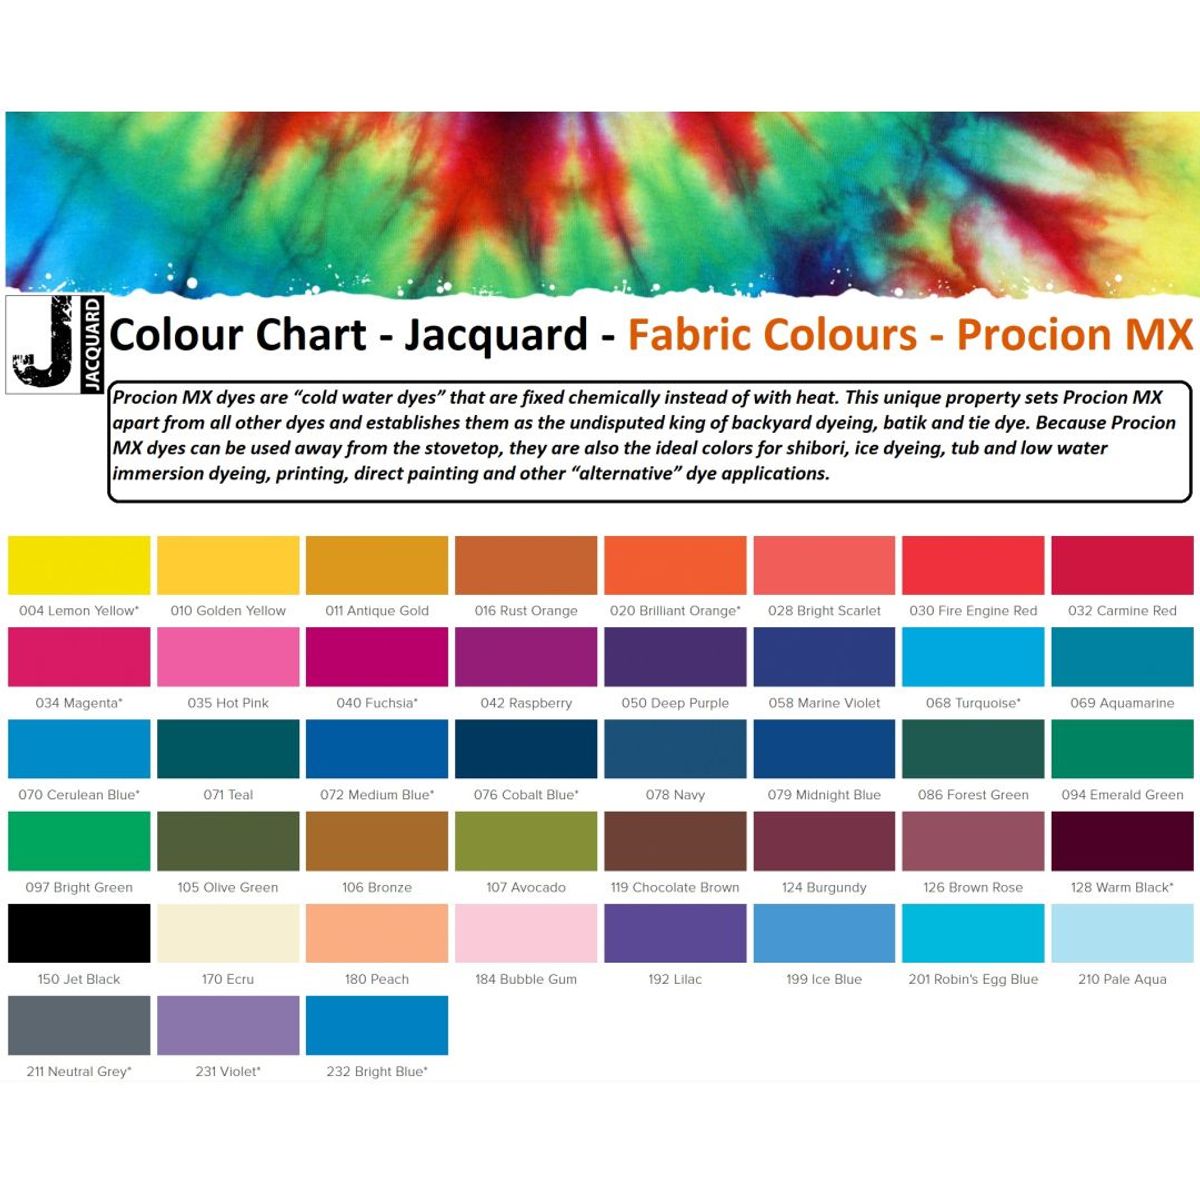 Jacquard - Procion MX Dye - Fabric Textile - Lilac 192